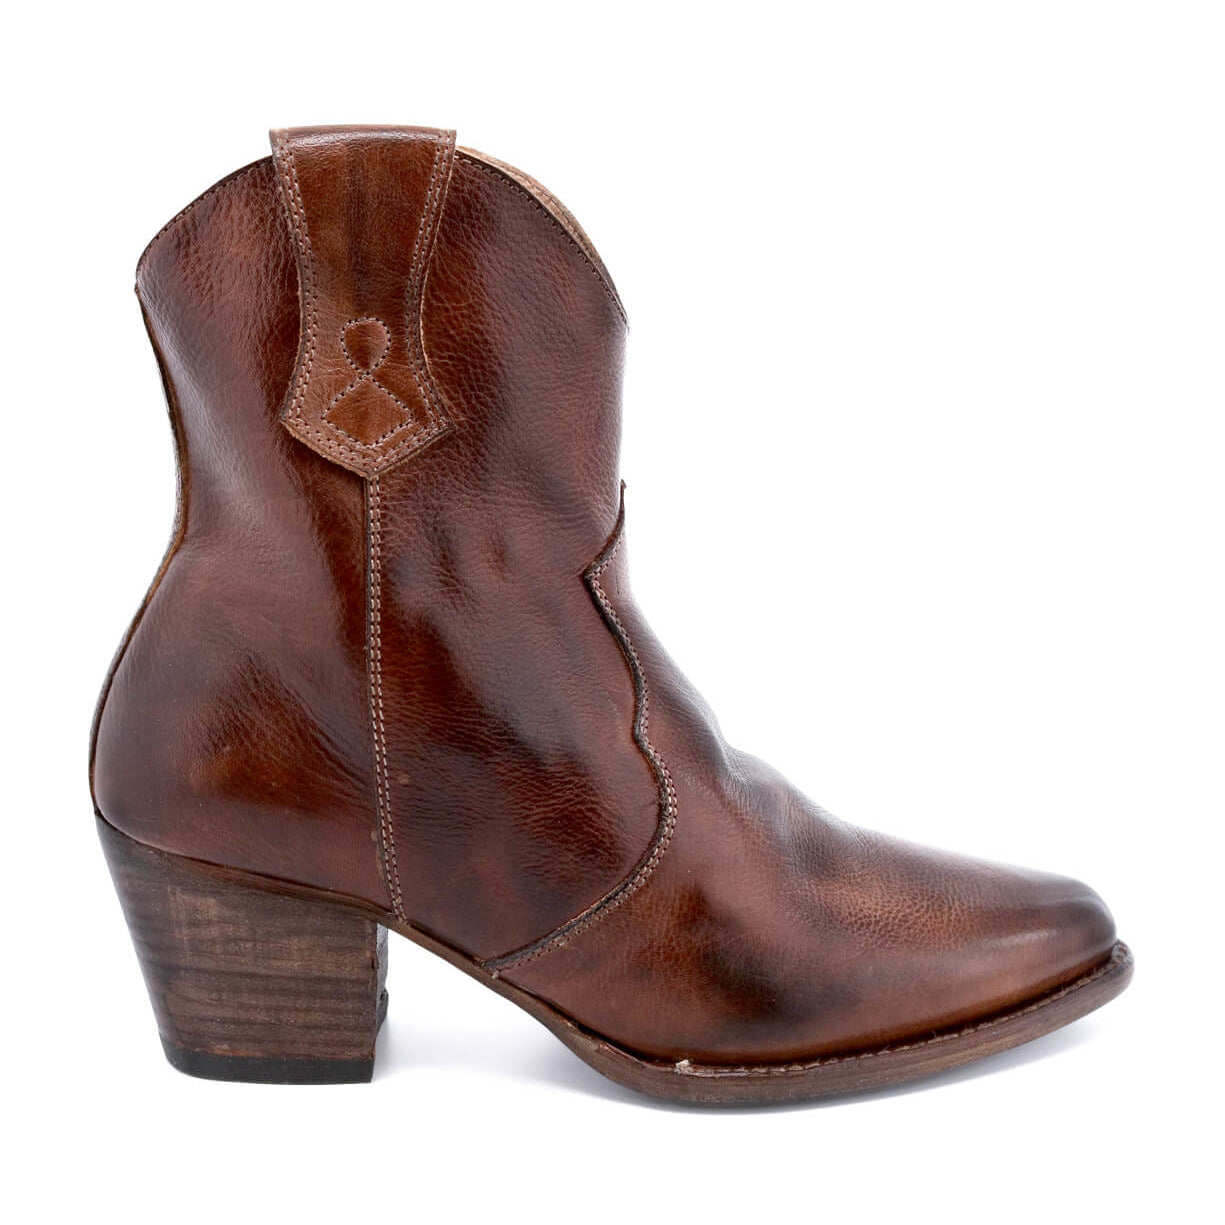 A women's Oak Tree Farms brown Baila cowboy boot with a wooden heel.